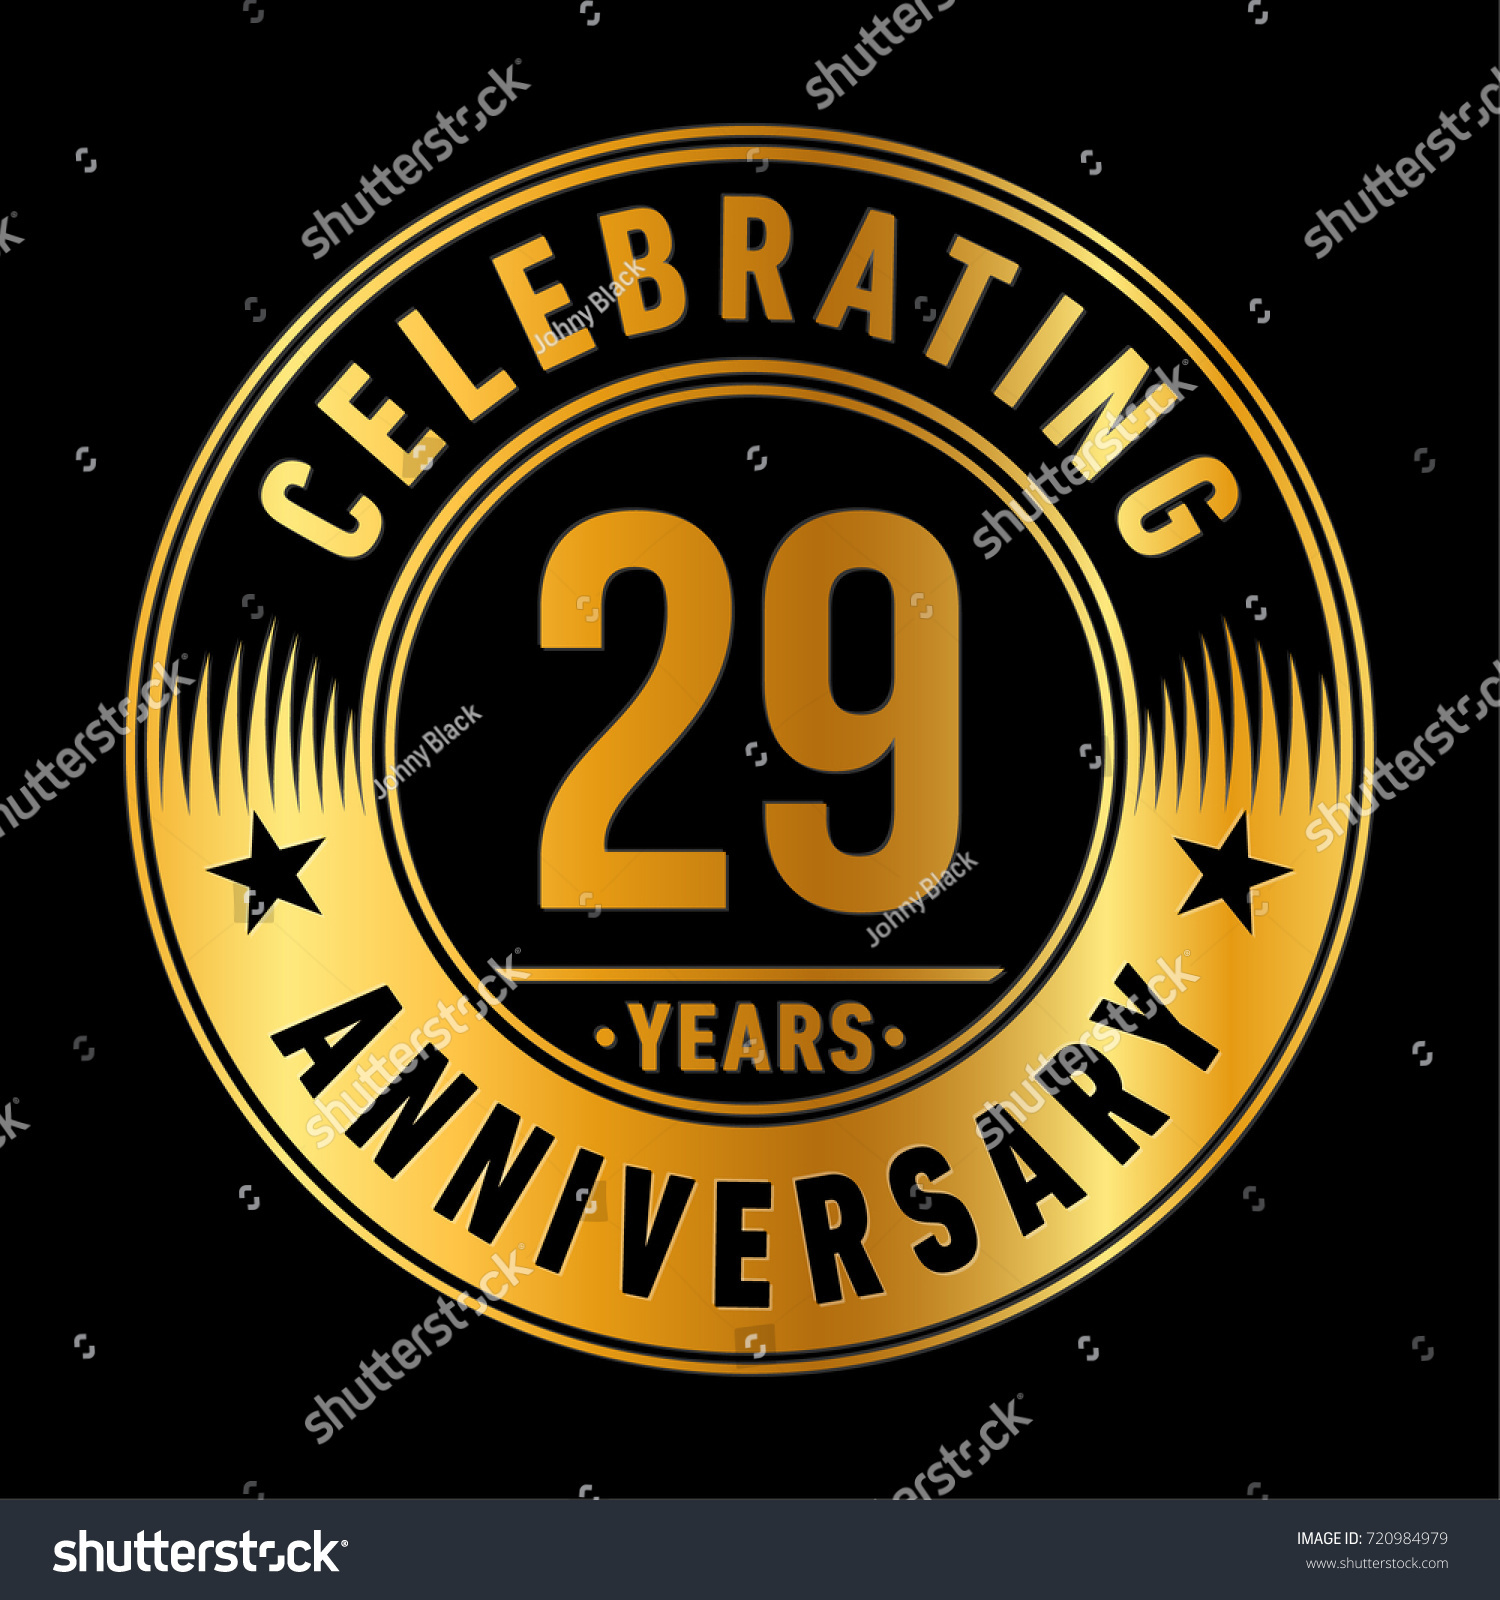 29-years-anniversary-logo-vector-illustration-stock-vector-720984979